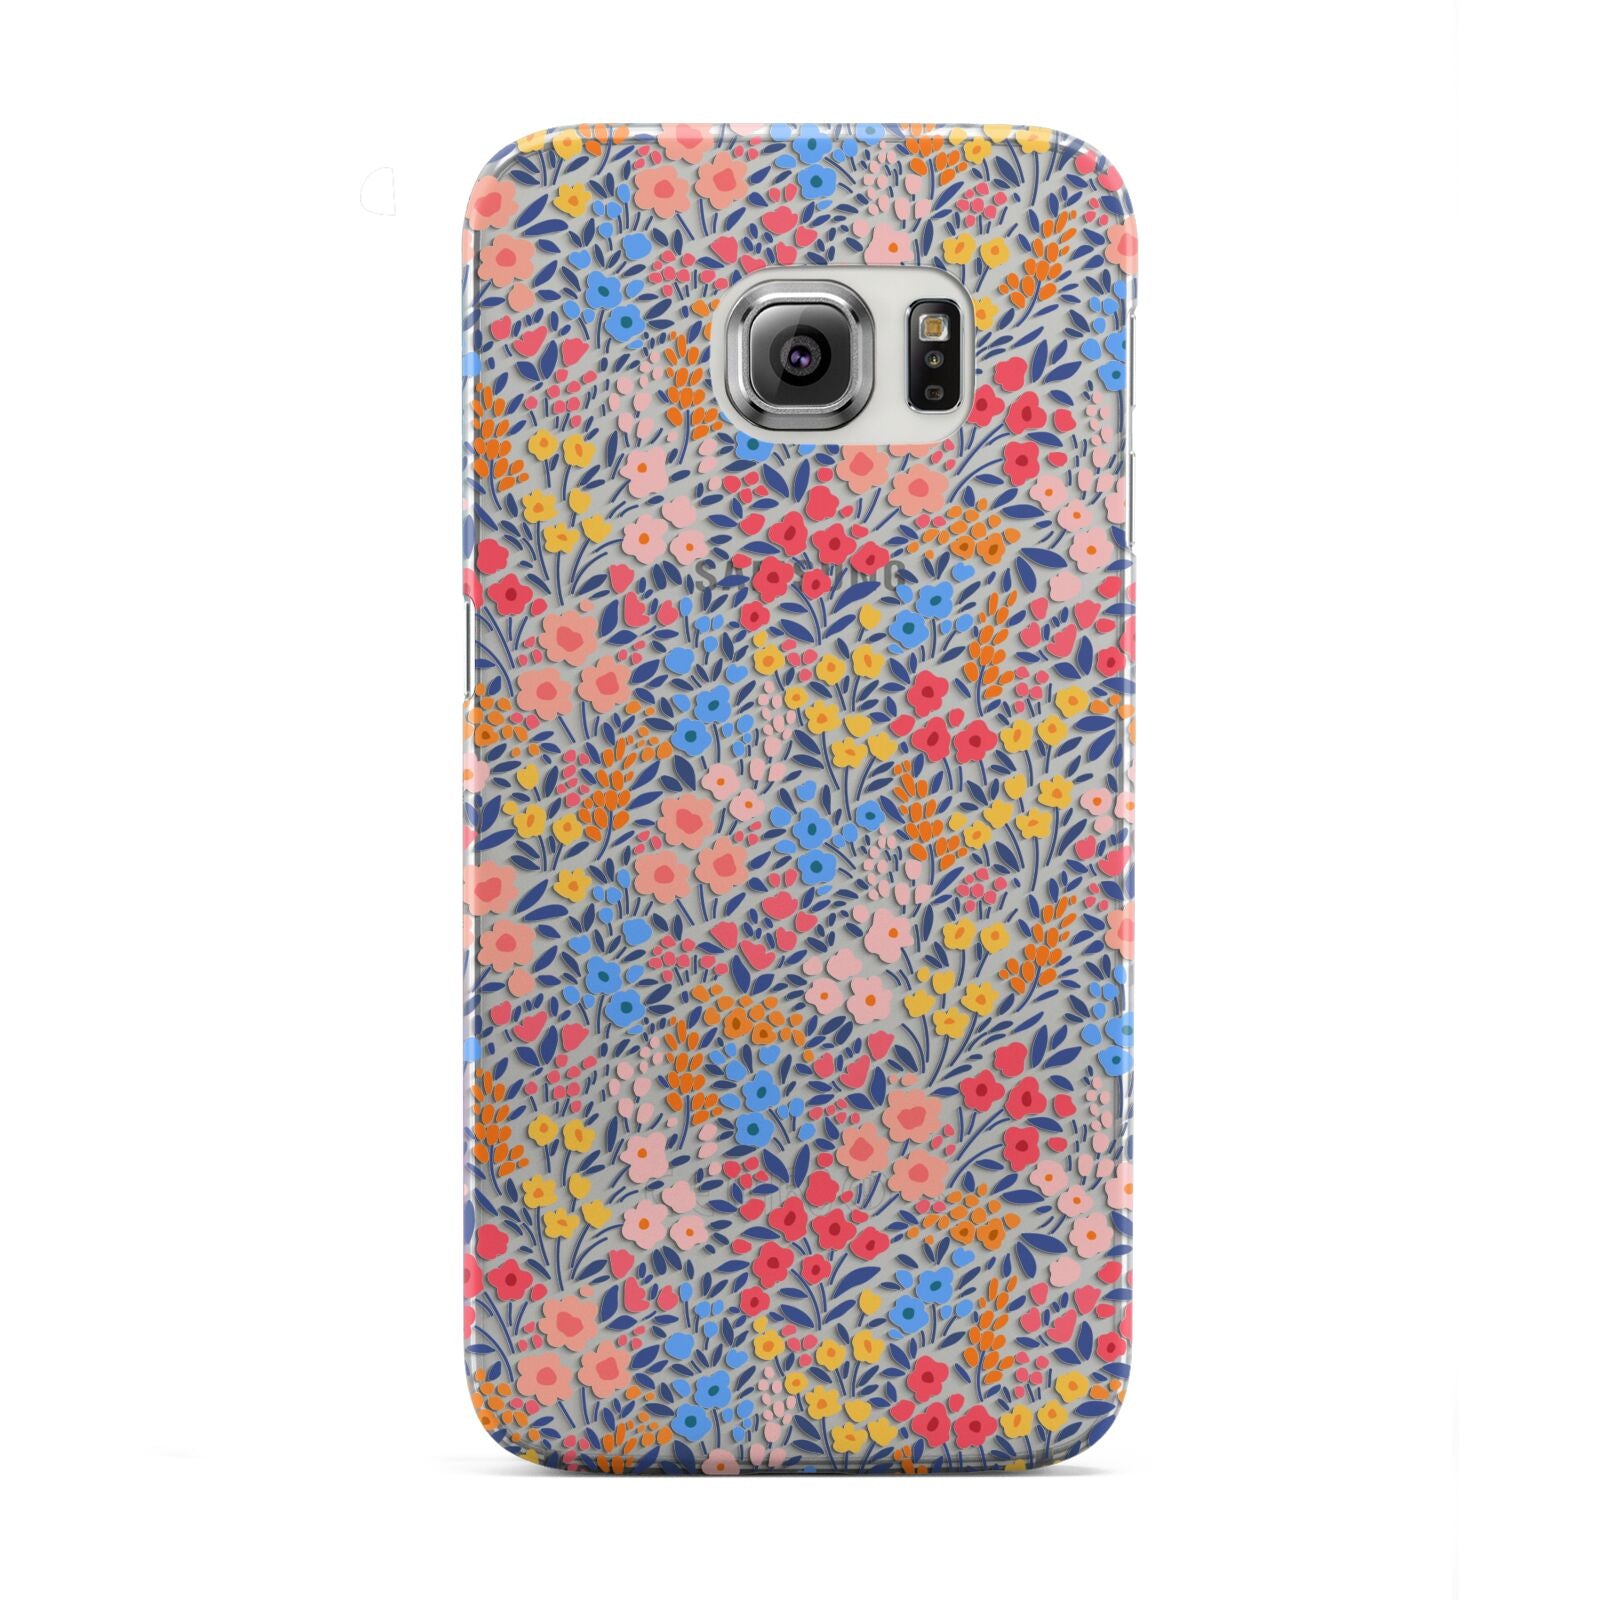 Small Flowers Samsung Galaxy S6 Edge Case